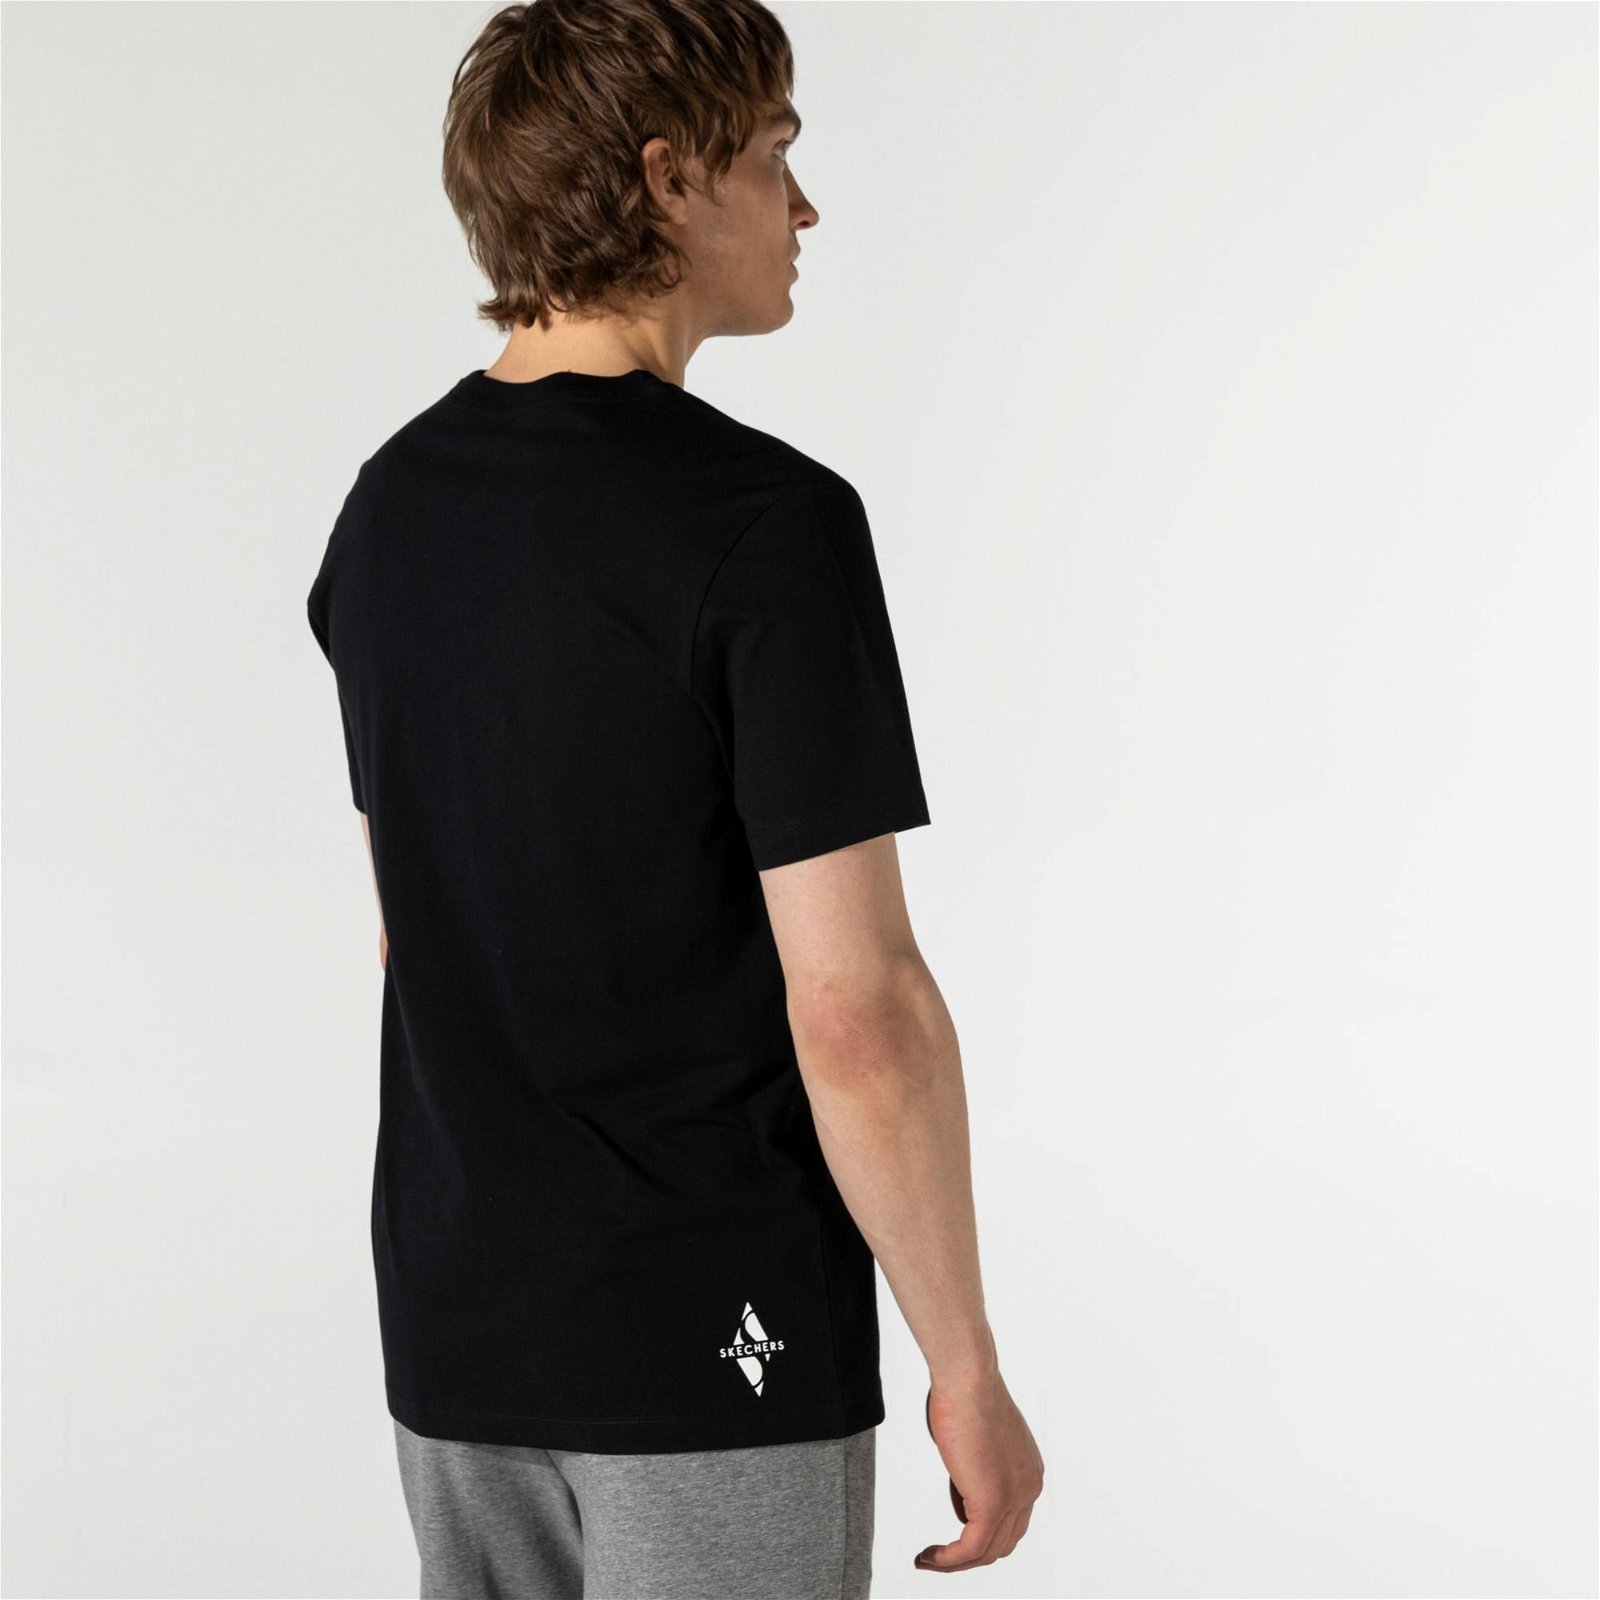 Skechers Graphic Erkek Siyah T-Shirt